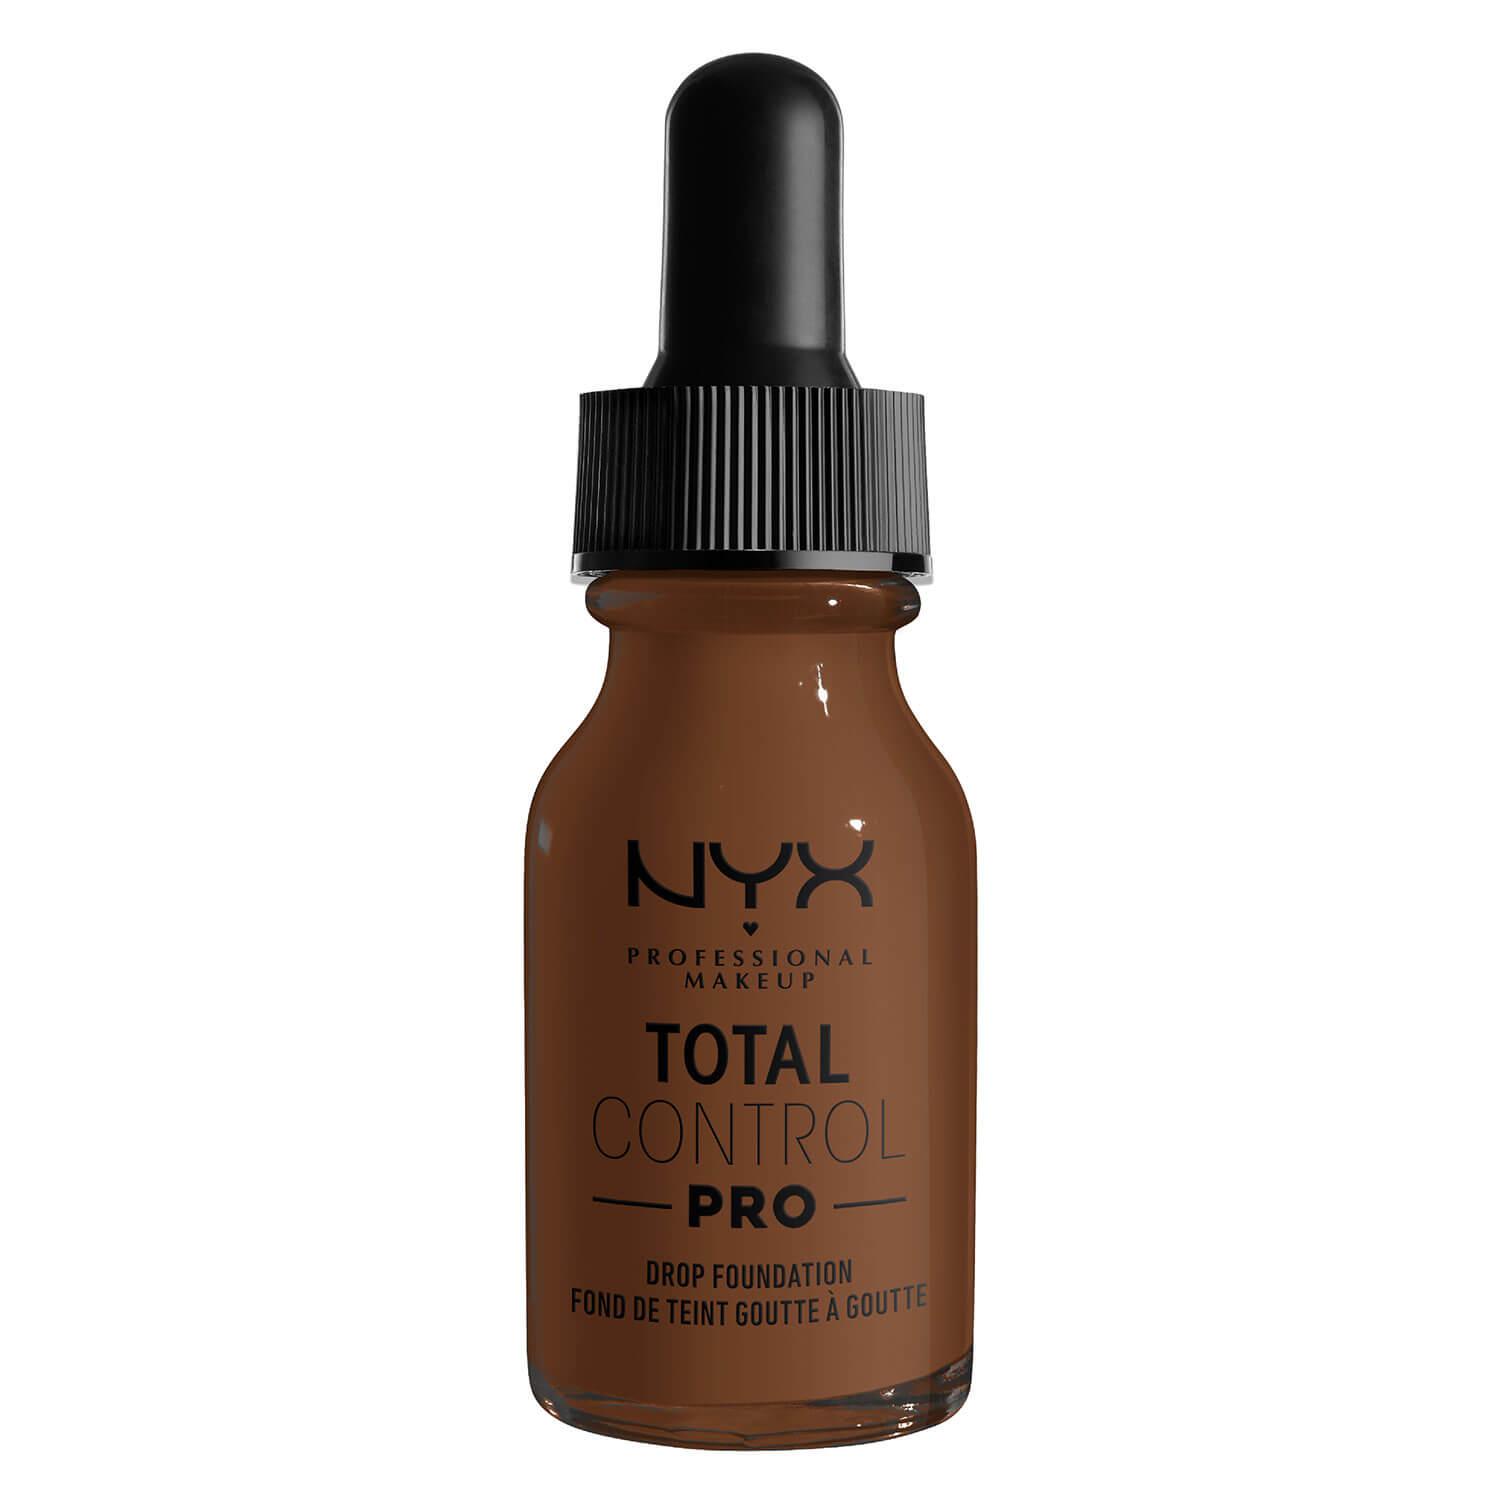 Total Control Pro - Drop Foundation Cocoa 21